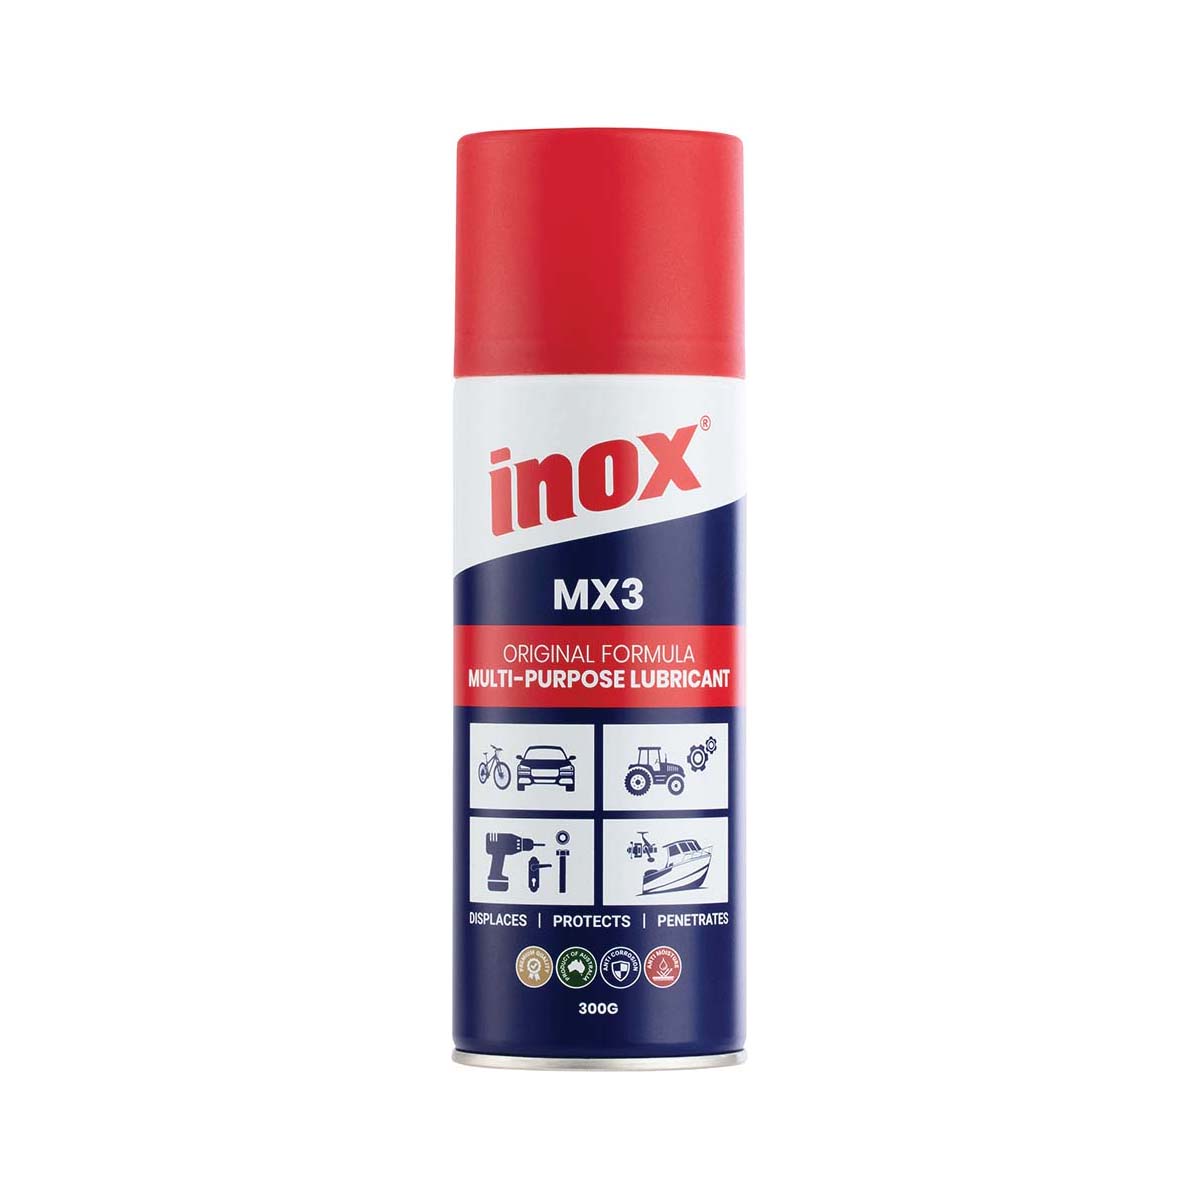 Inox MX3 Lubricant 300g